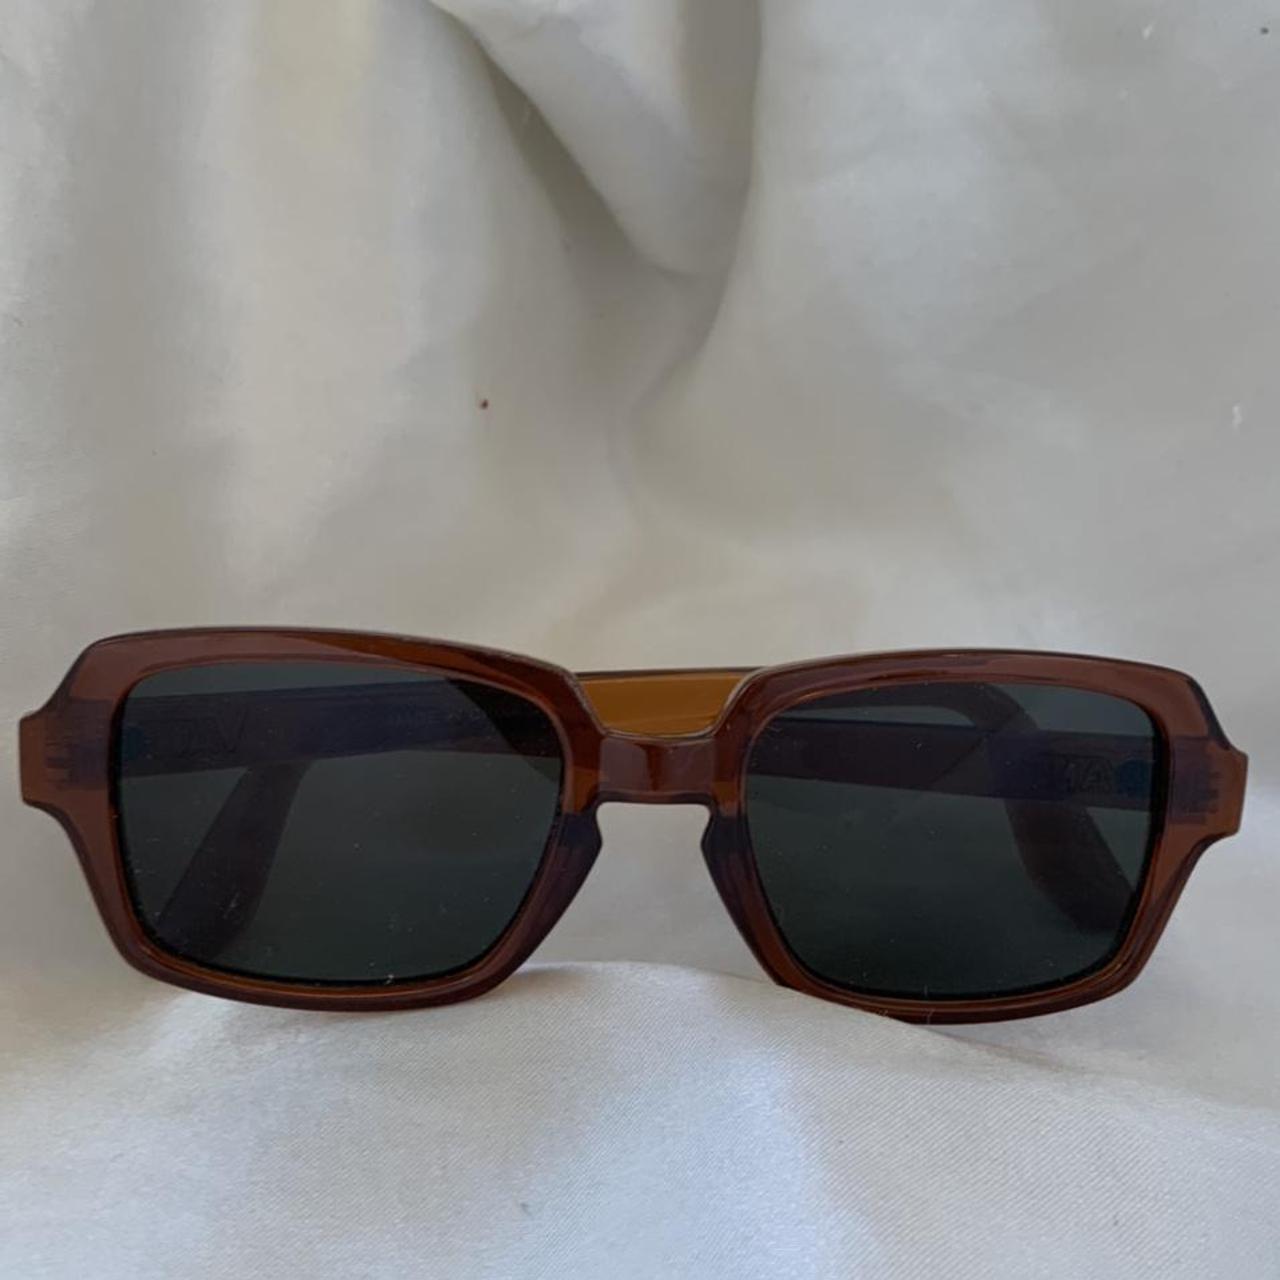 Product Image 1 - Vans sunglasses